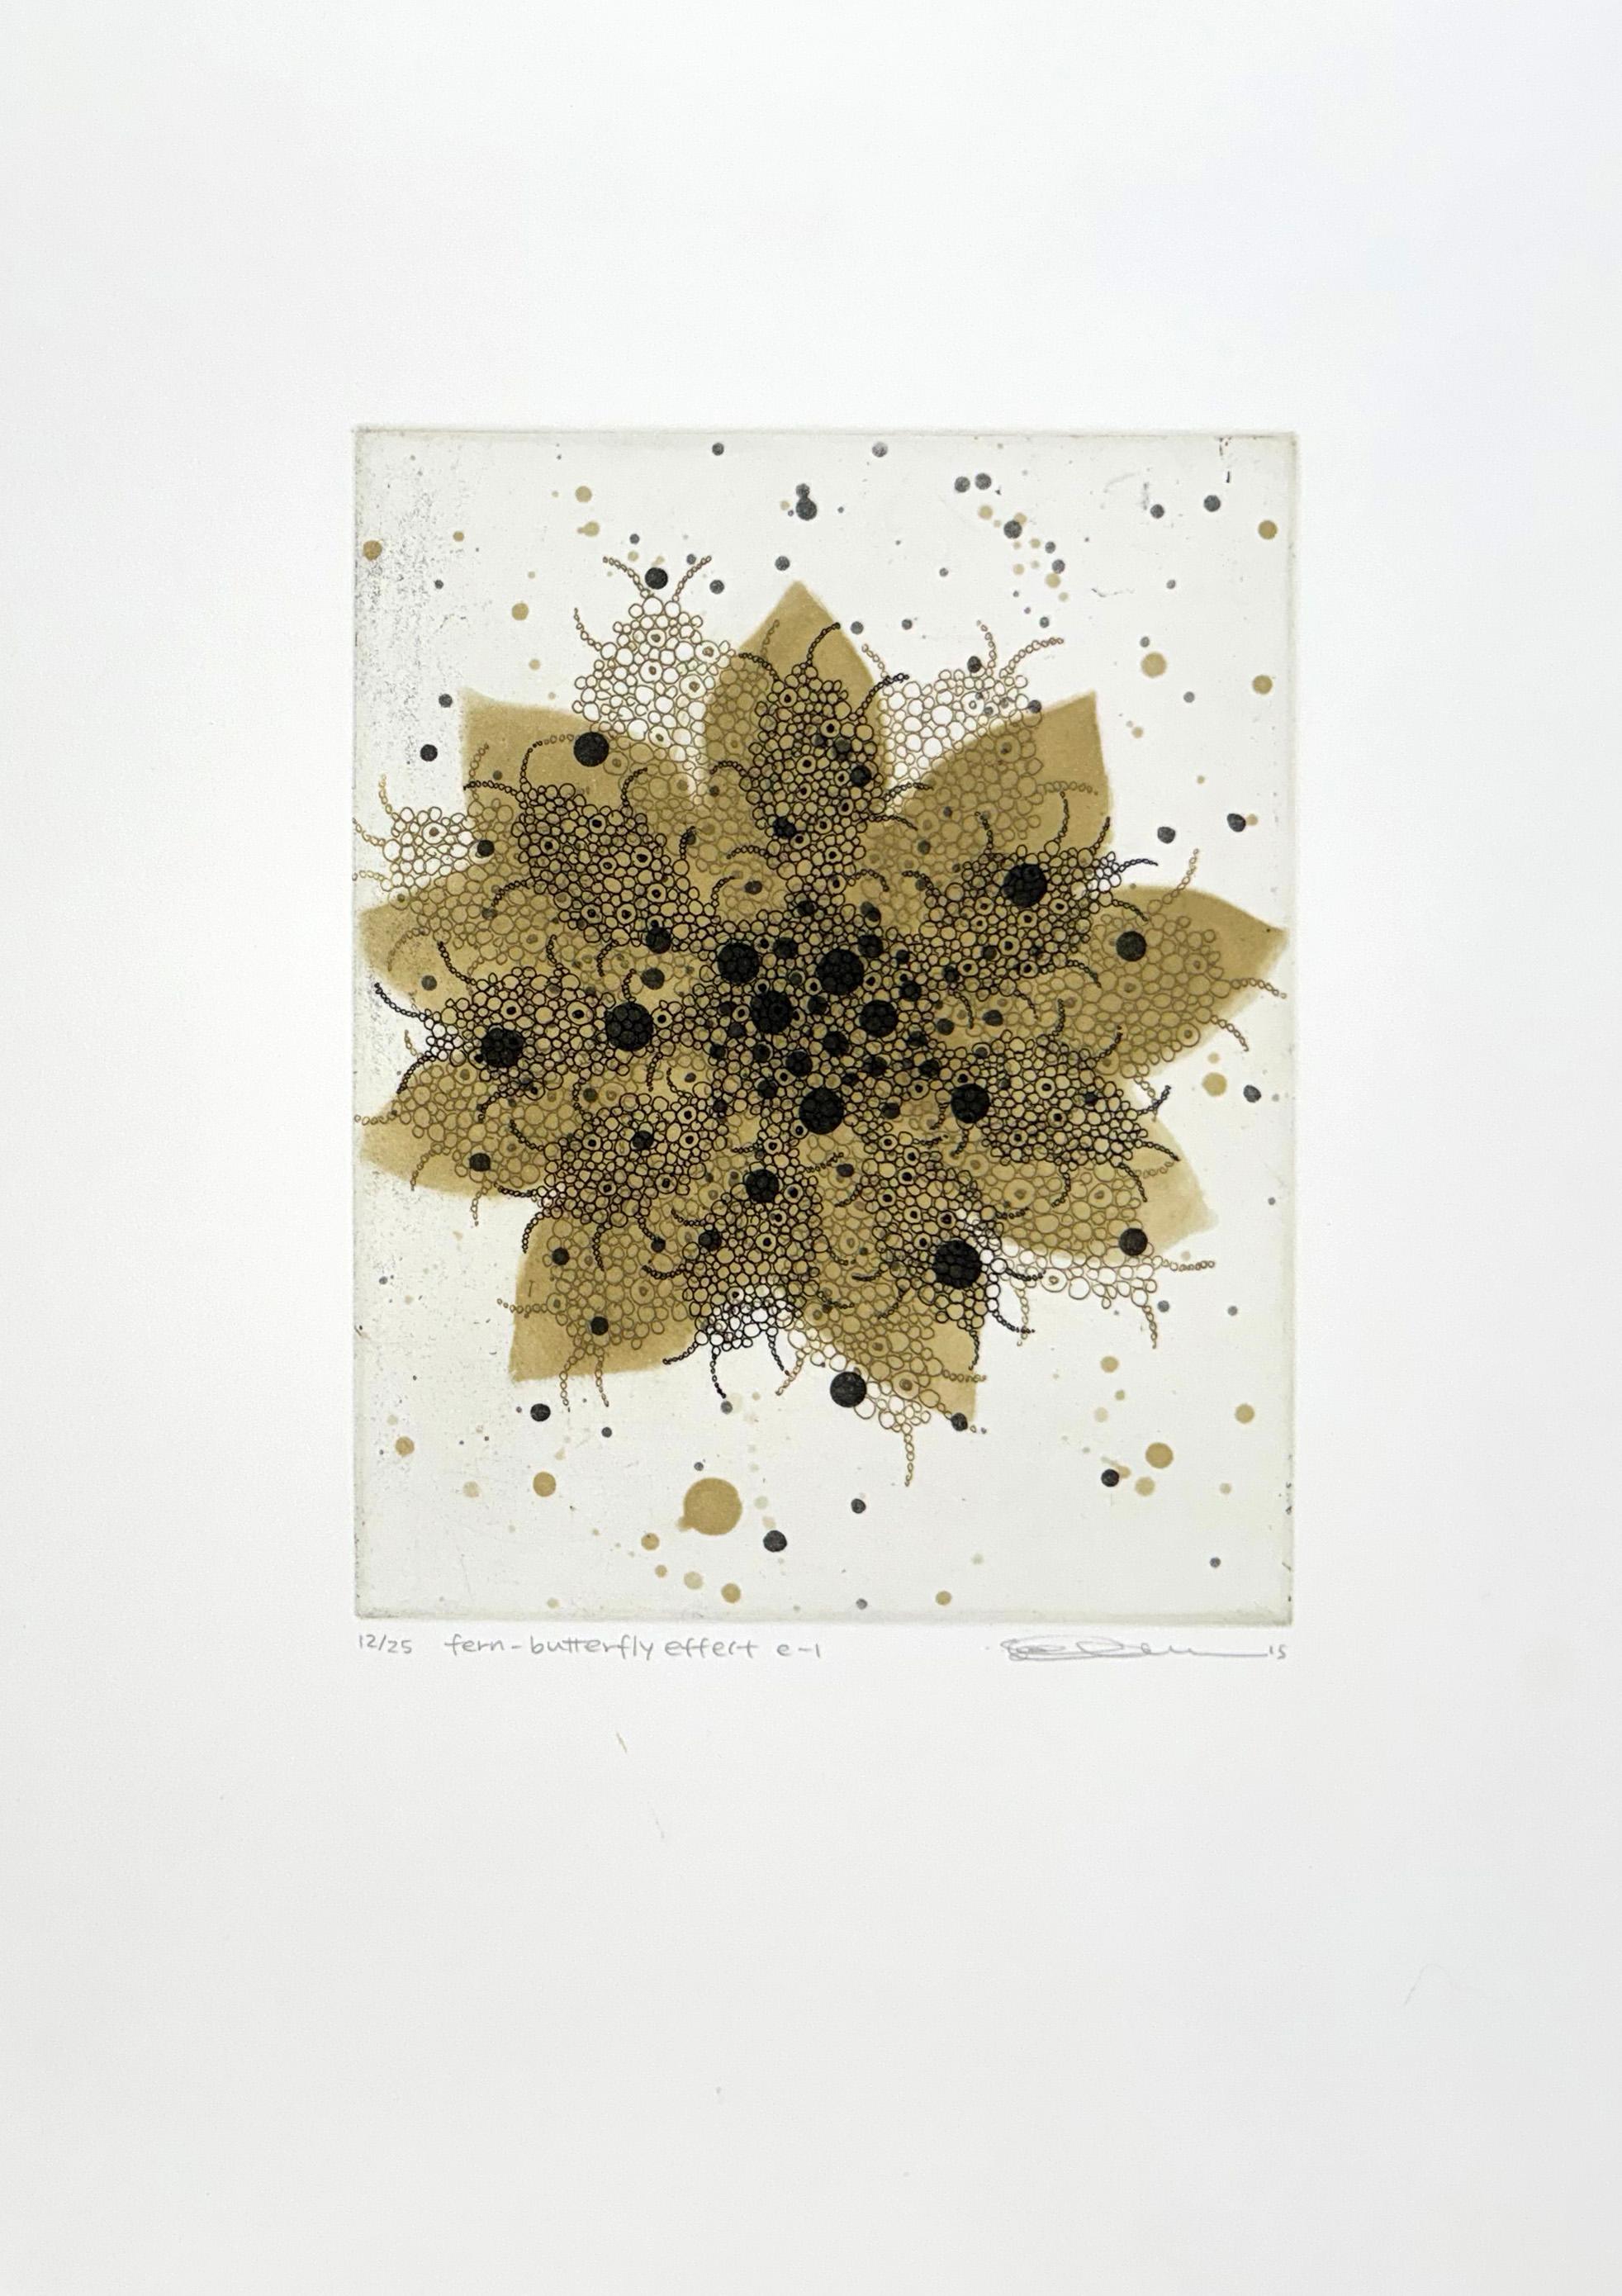 fern-butterfly effect  e-1 - Print by Seiko Tachibana